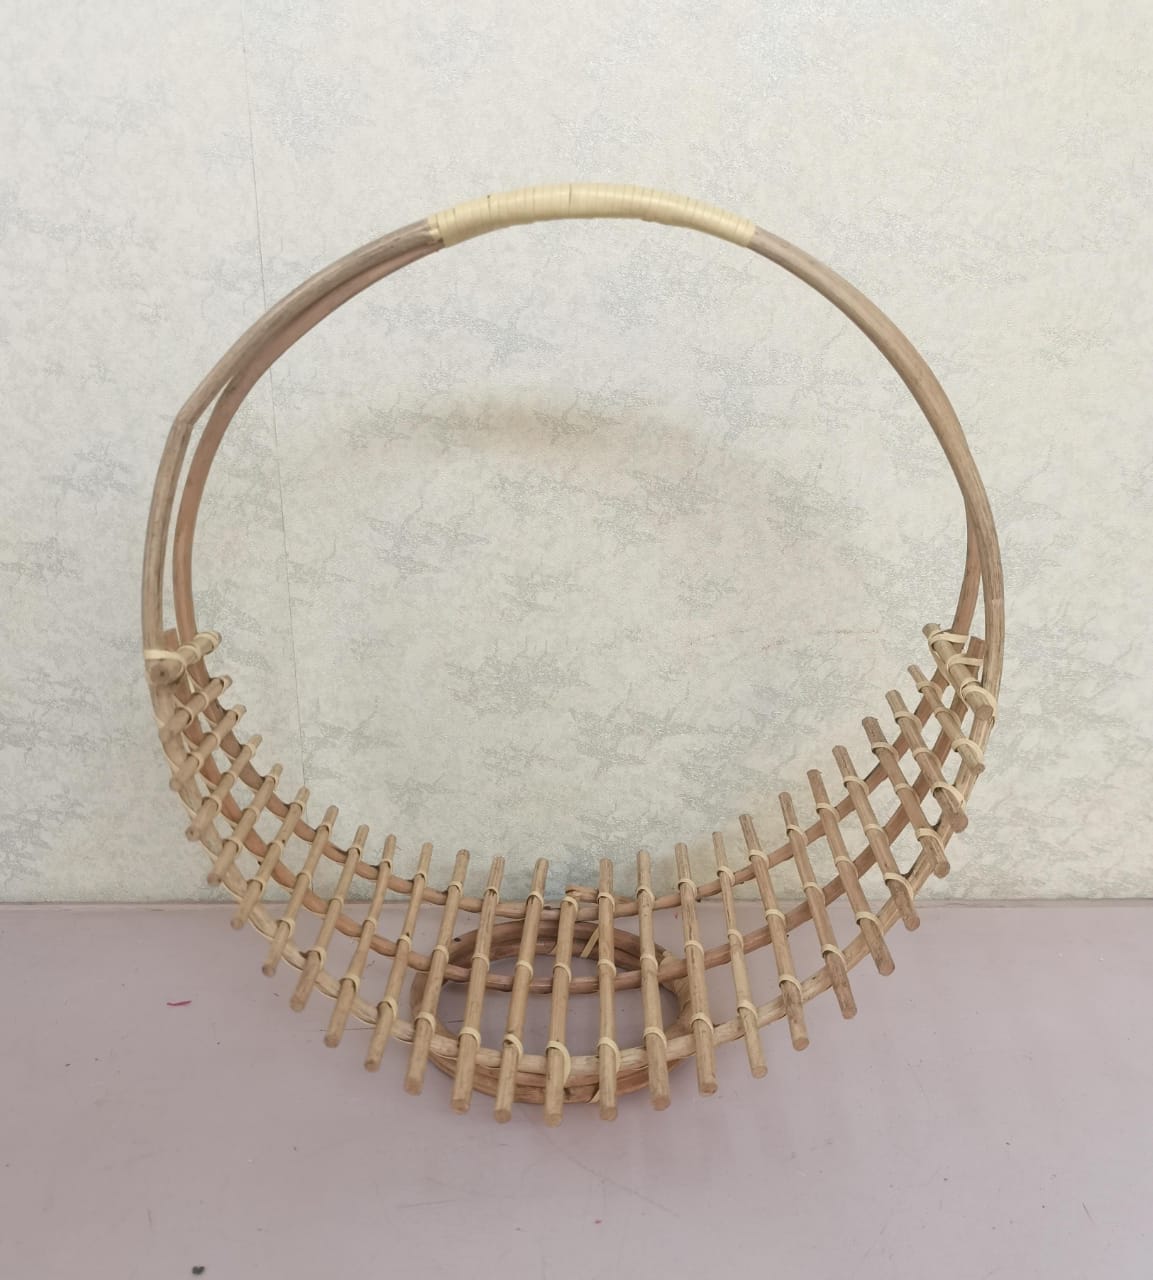 Cane round basket with handle (H:30cm W:29cm)